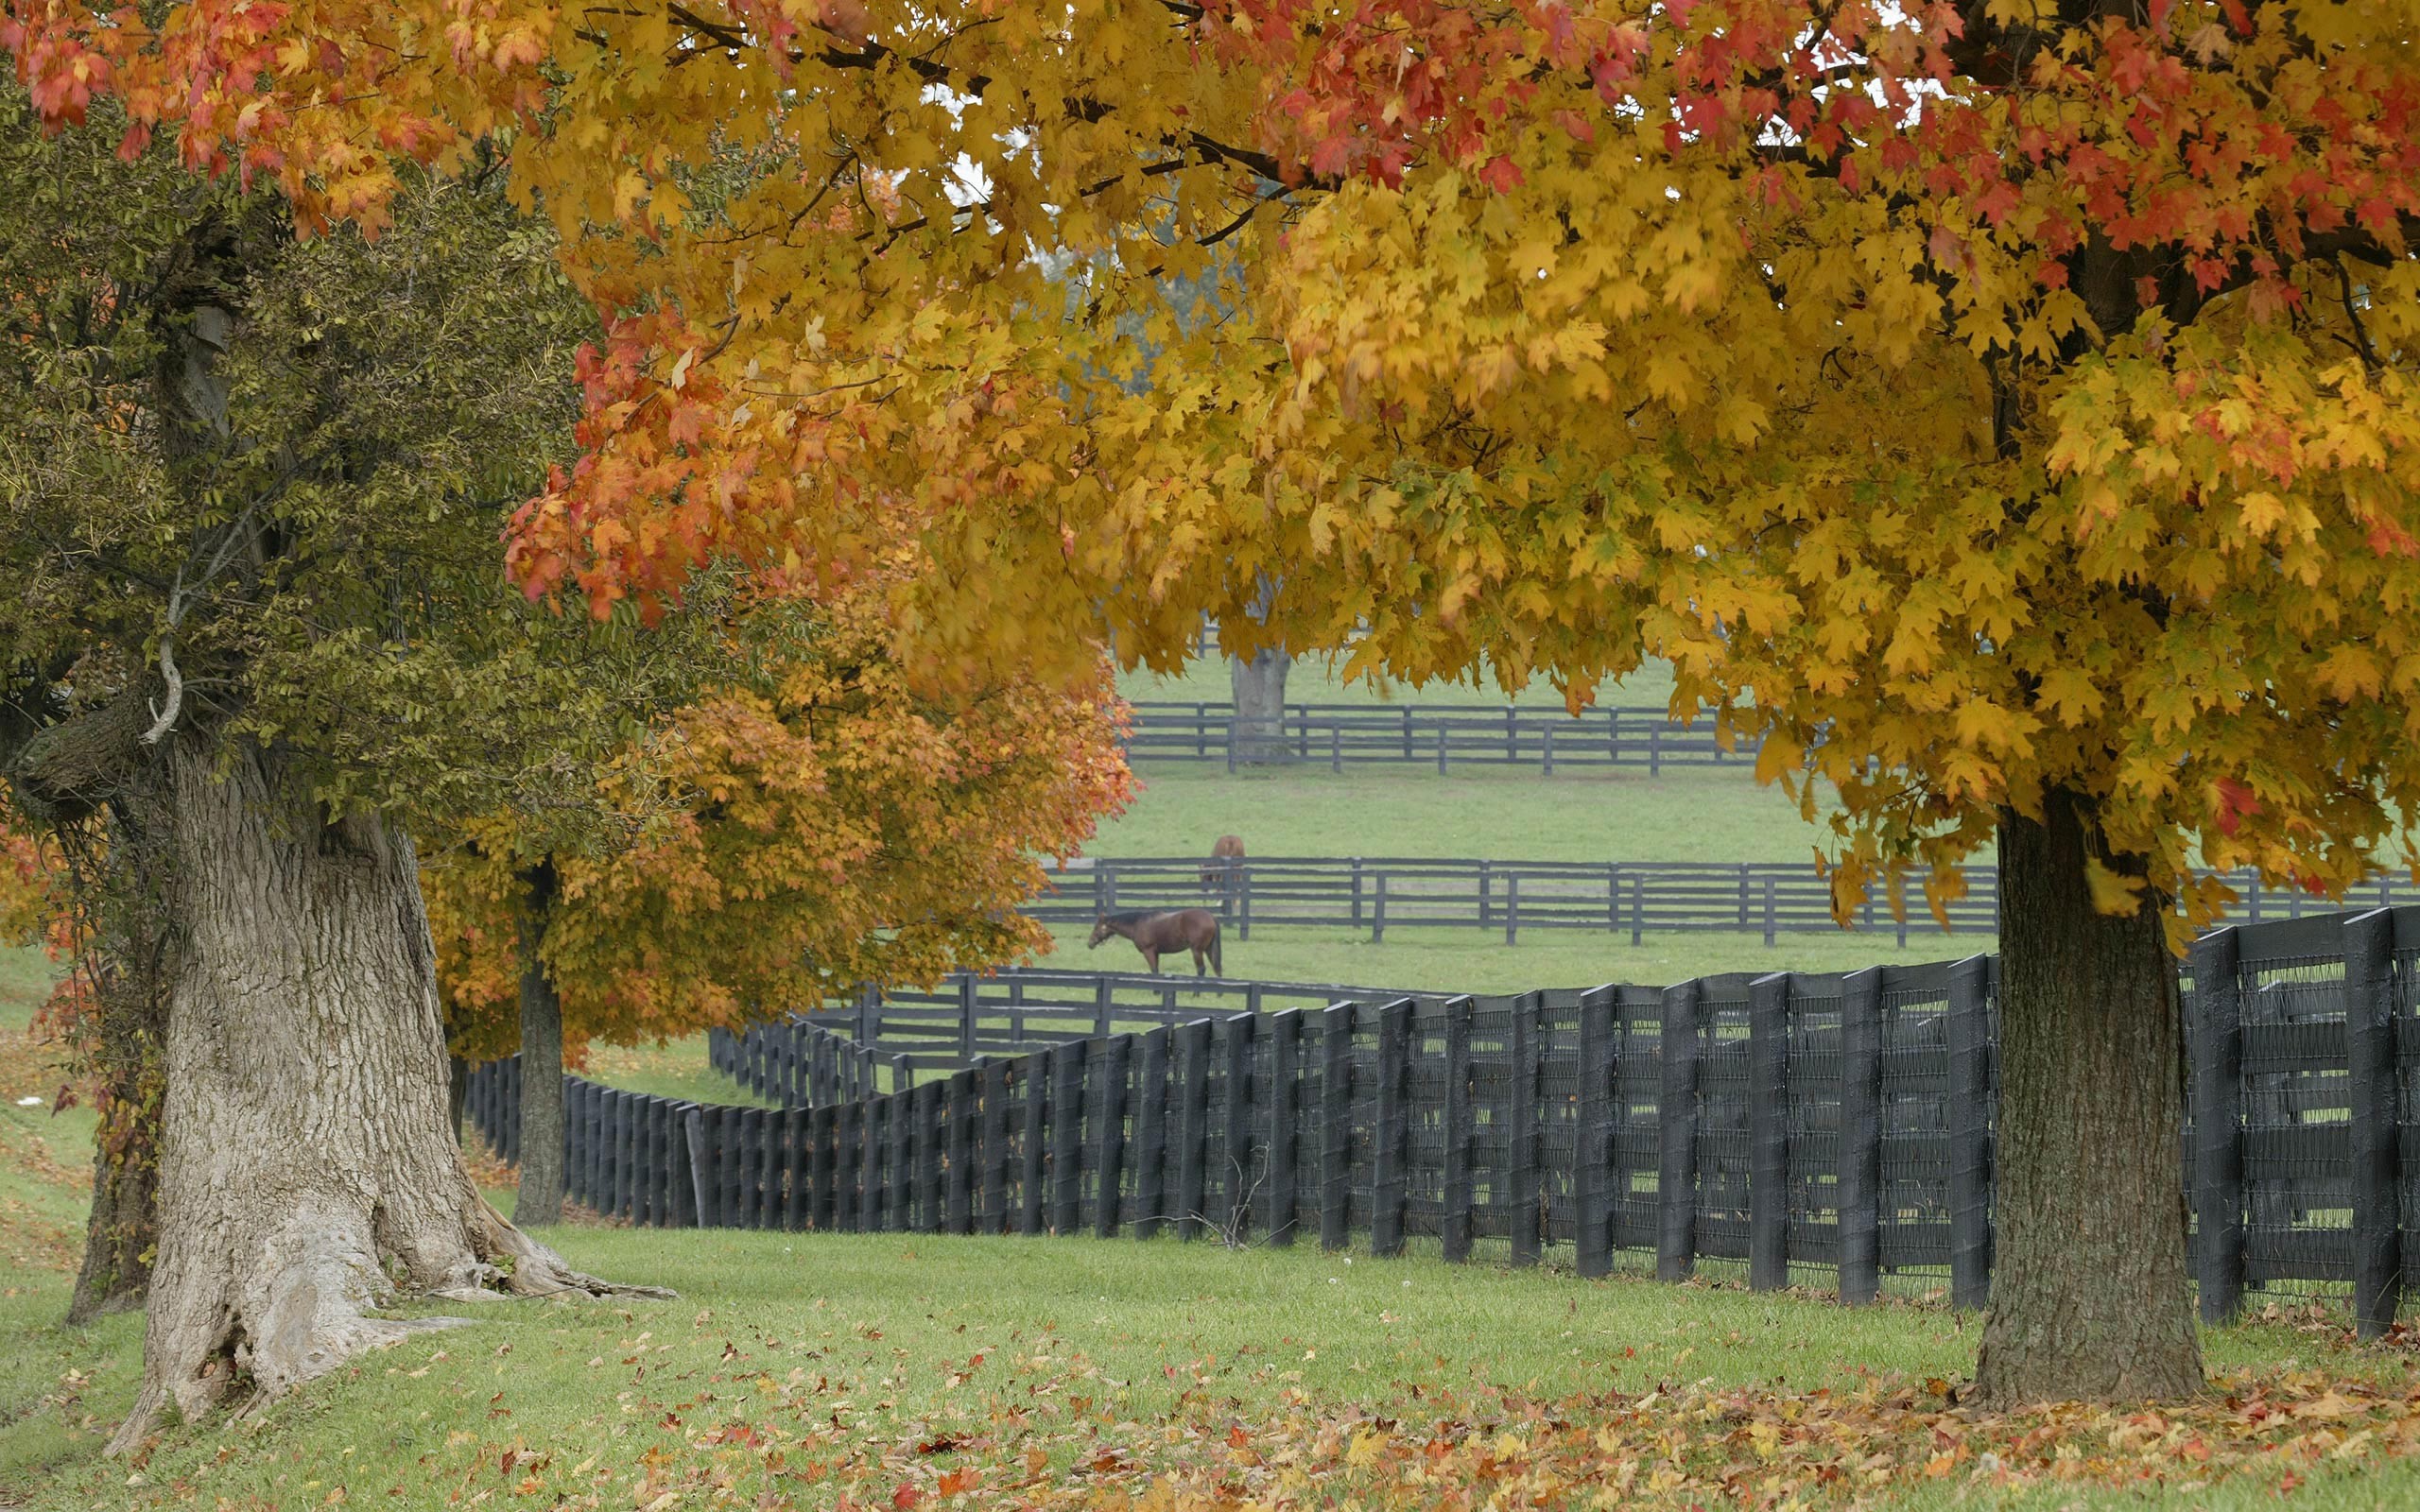 General 2560x1600 animals horse mammals trees fence